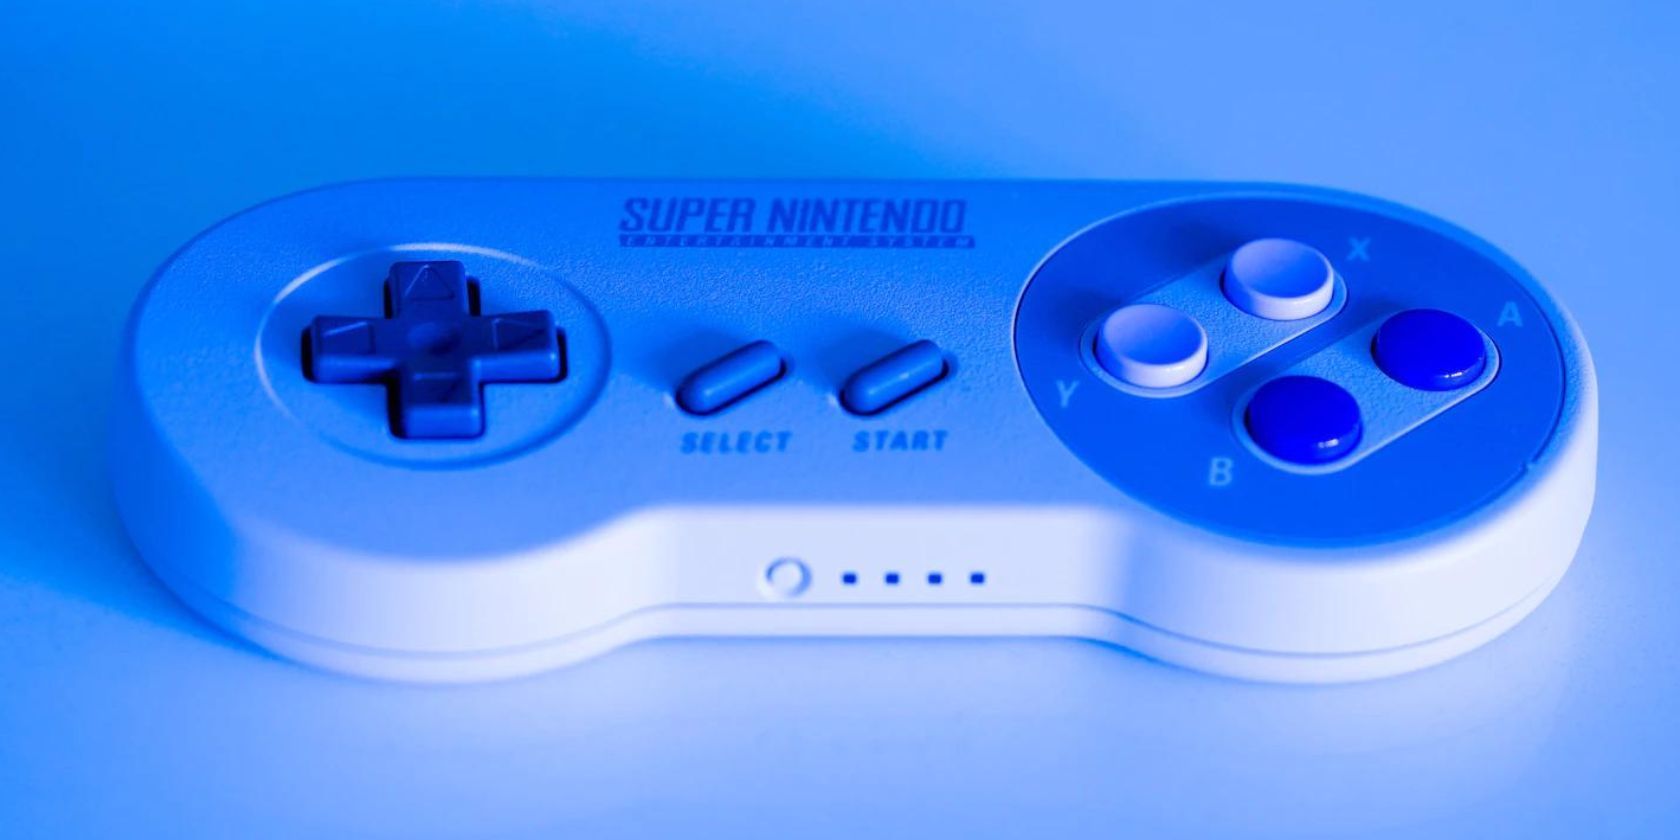 Close up shot of Super Nintendo controller